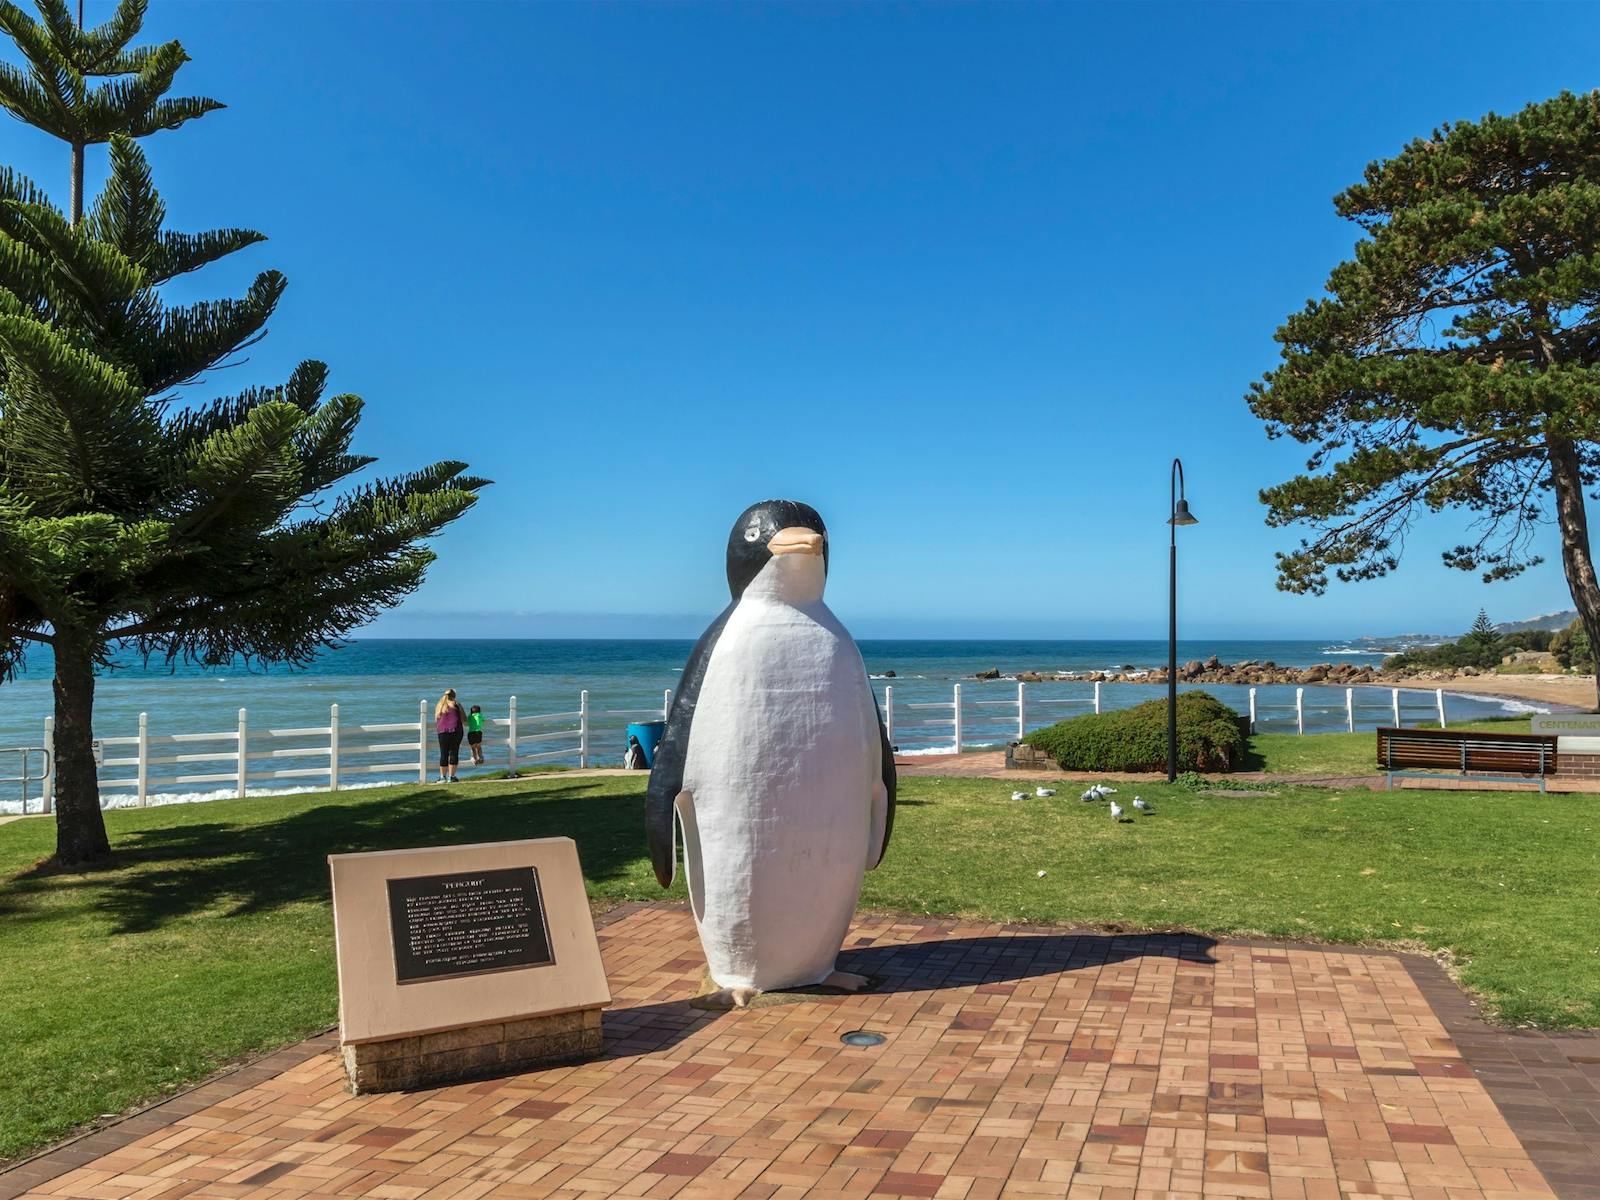 The Big Penguin at Penguin NW Tasmania